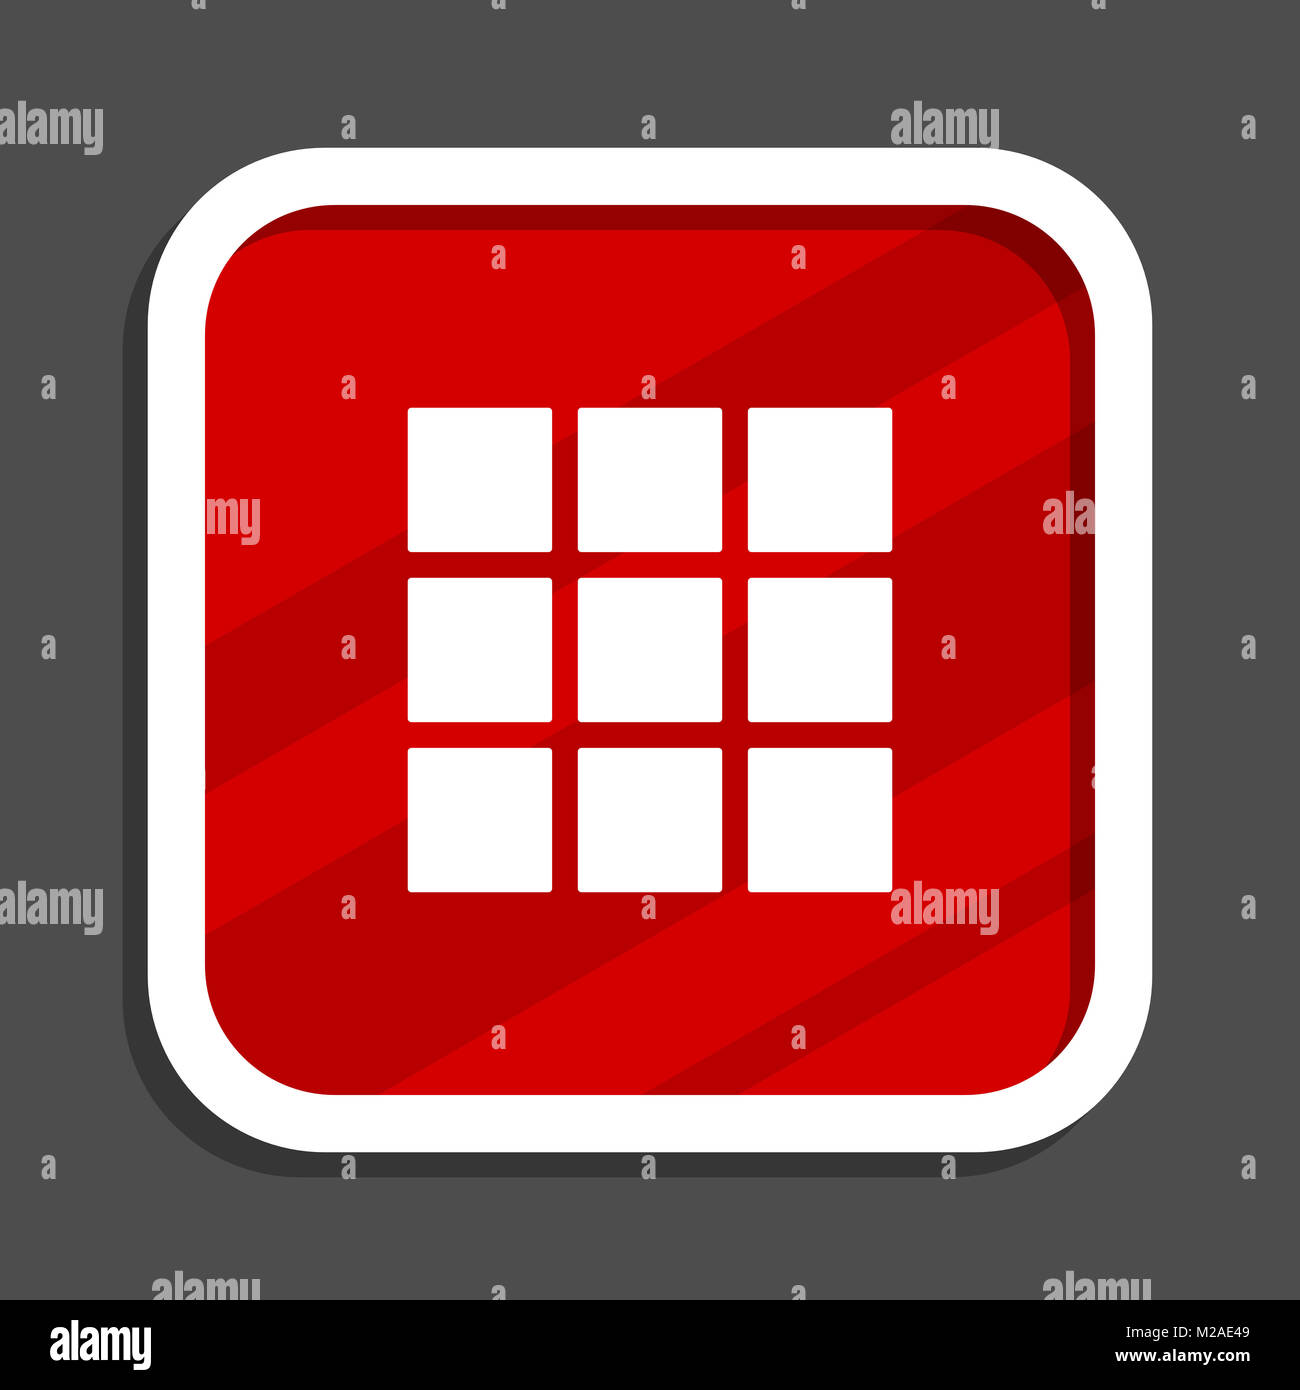 Thumbnails grid icon. Flat design square internet banner. Stock Photo